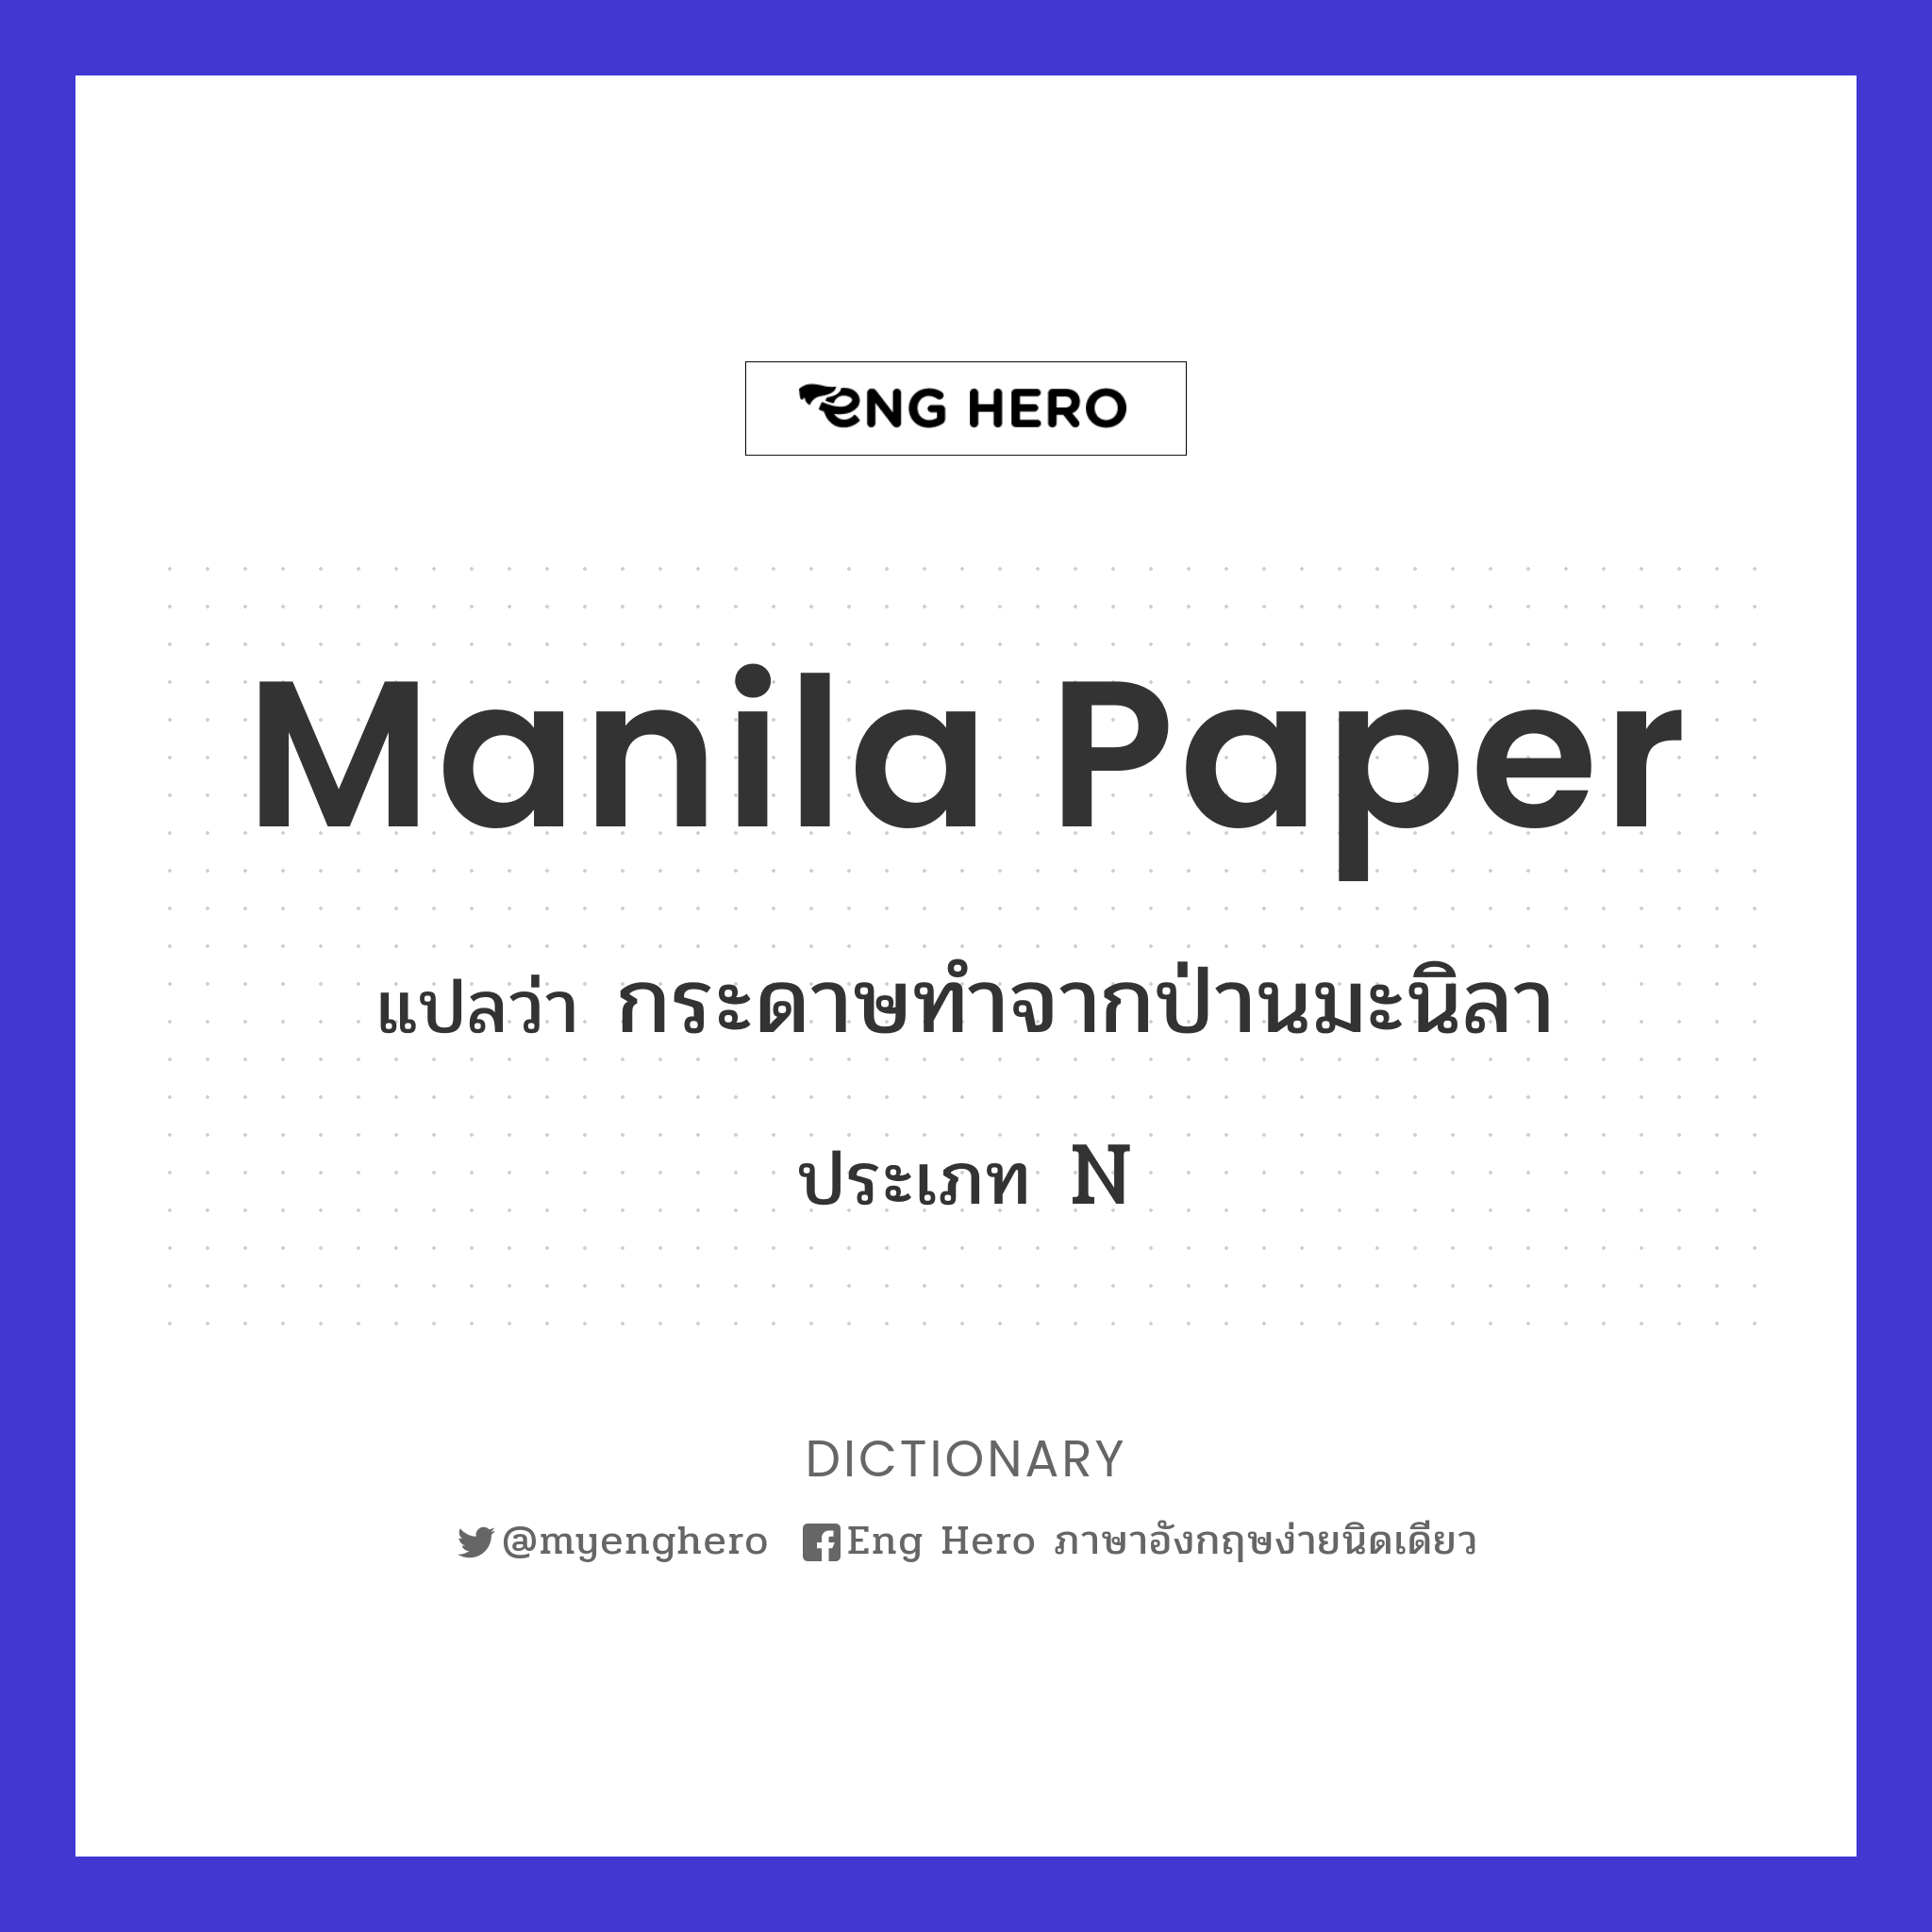 Manila paper